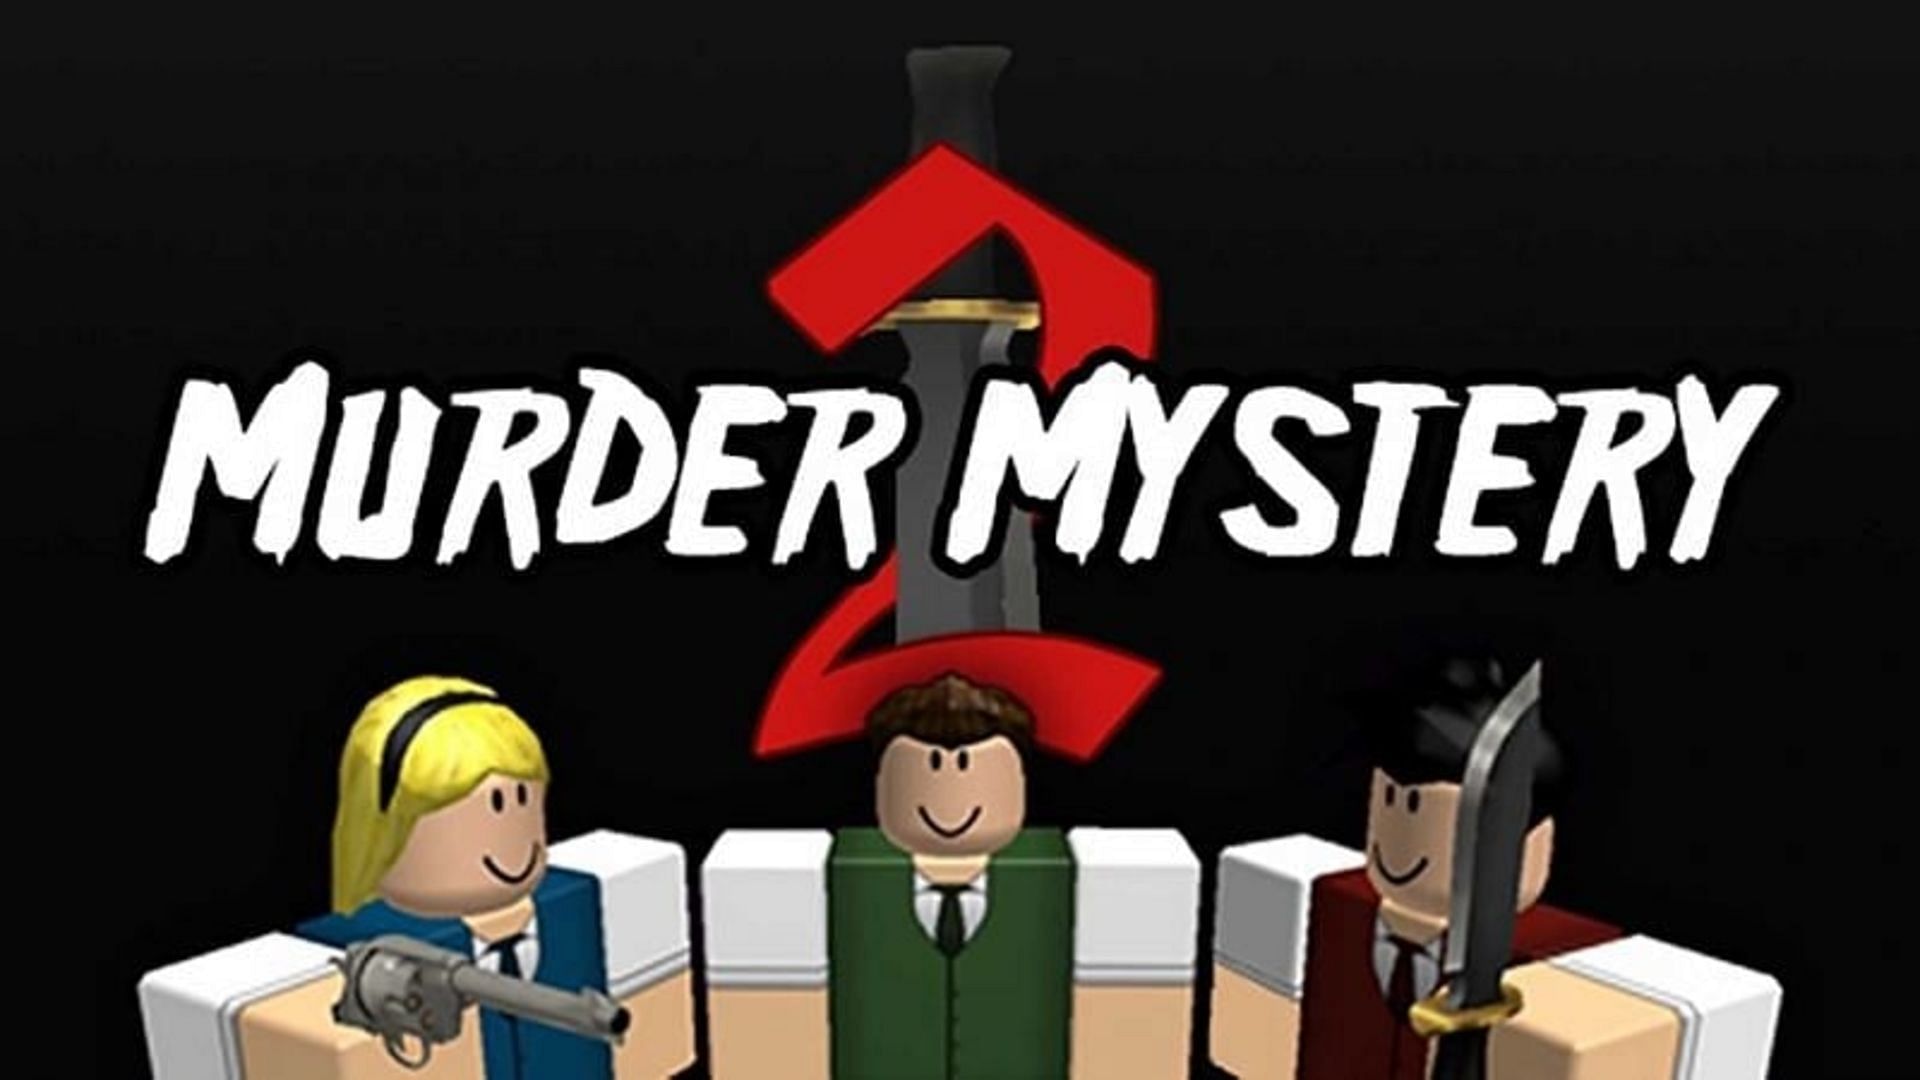 the highest value set on murder mystery｜TikTok Search